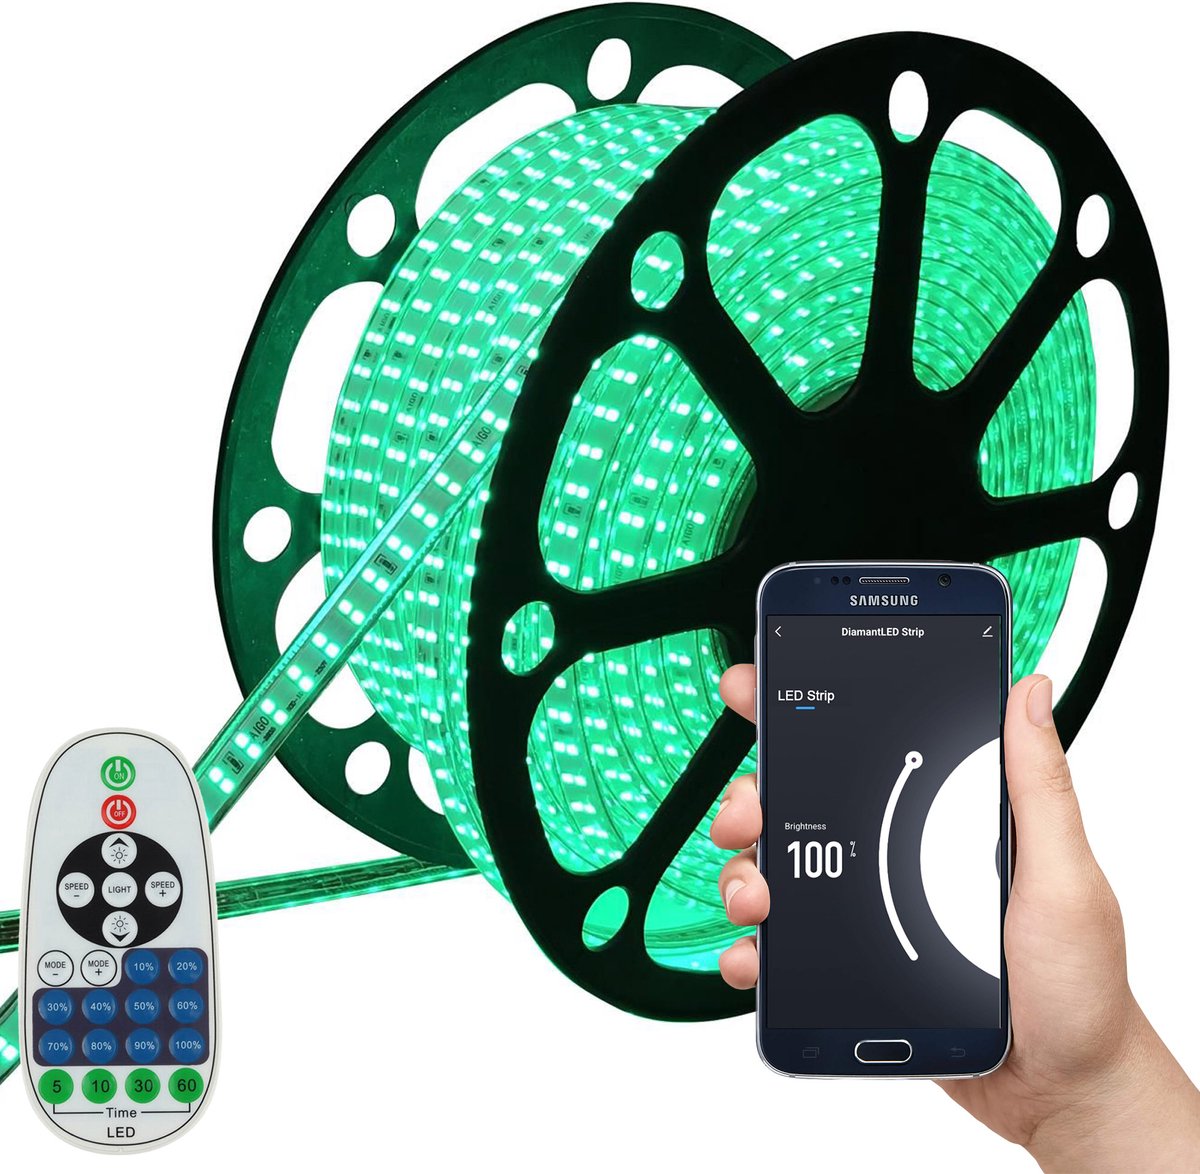 LED Strip Groen - 40 Meter aan één stuk - 180 LED's per meter - Met Wi-Fi App + IR 23 knops afstandsbediening - Smarthome - Google Home/Amazon Alexa - Waterdicht - Makkelijke mobiele App voor bedienen inclusief afstandsbediening - iOS en Android